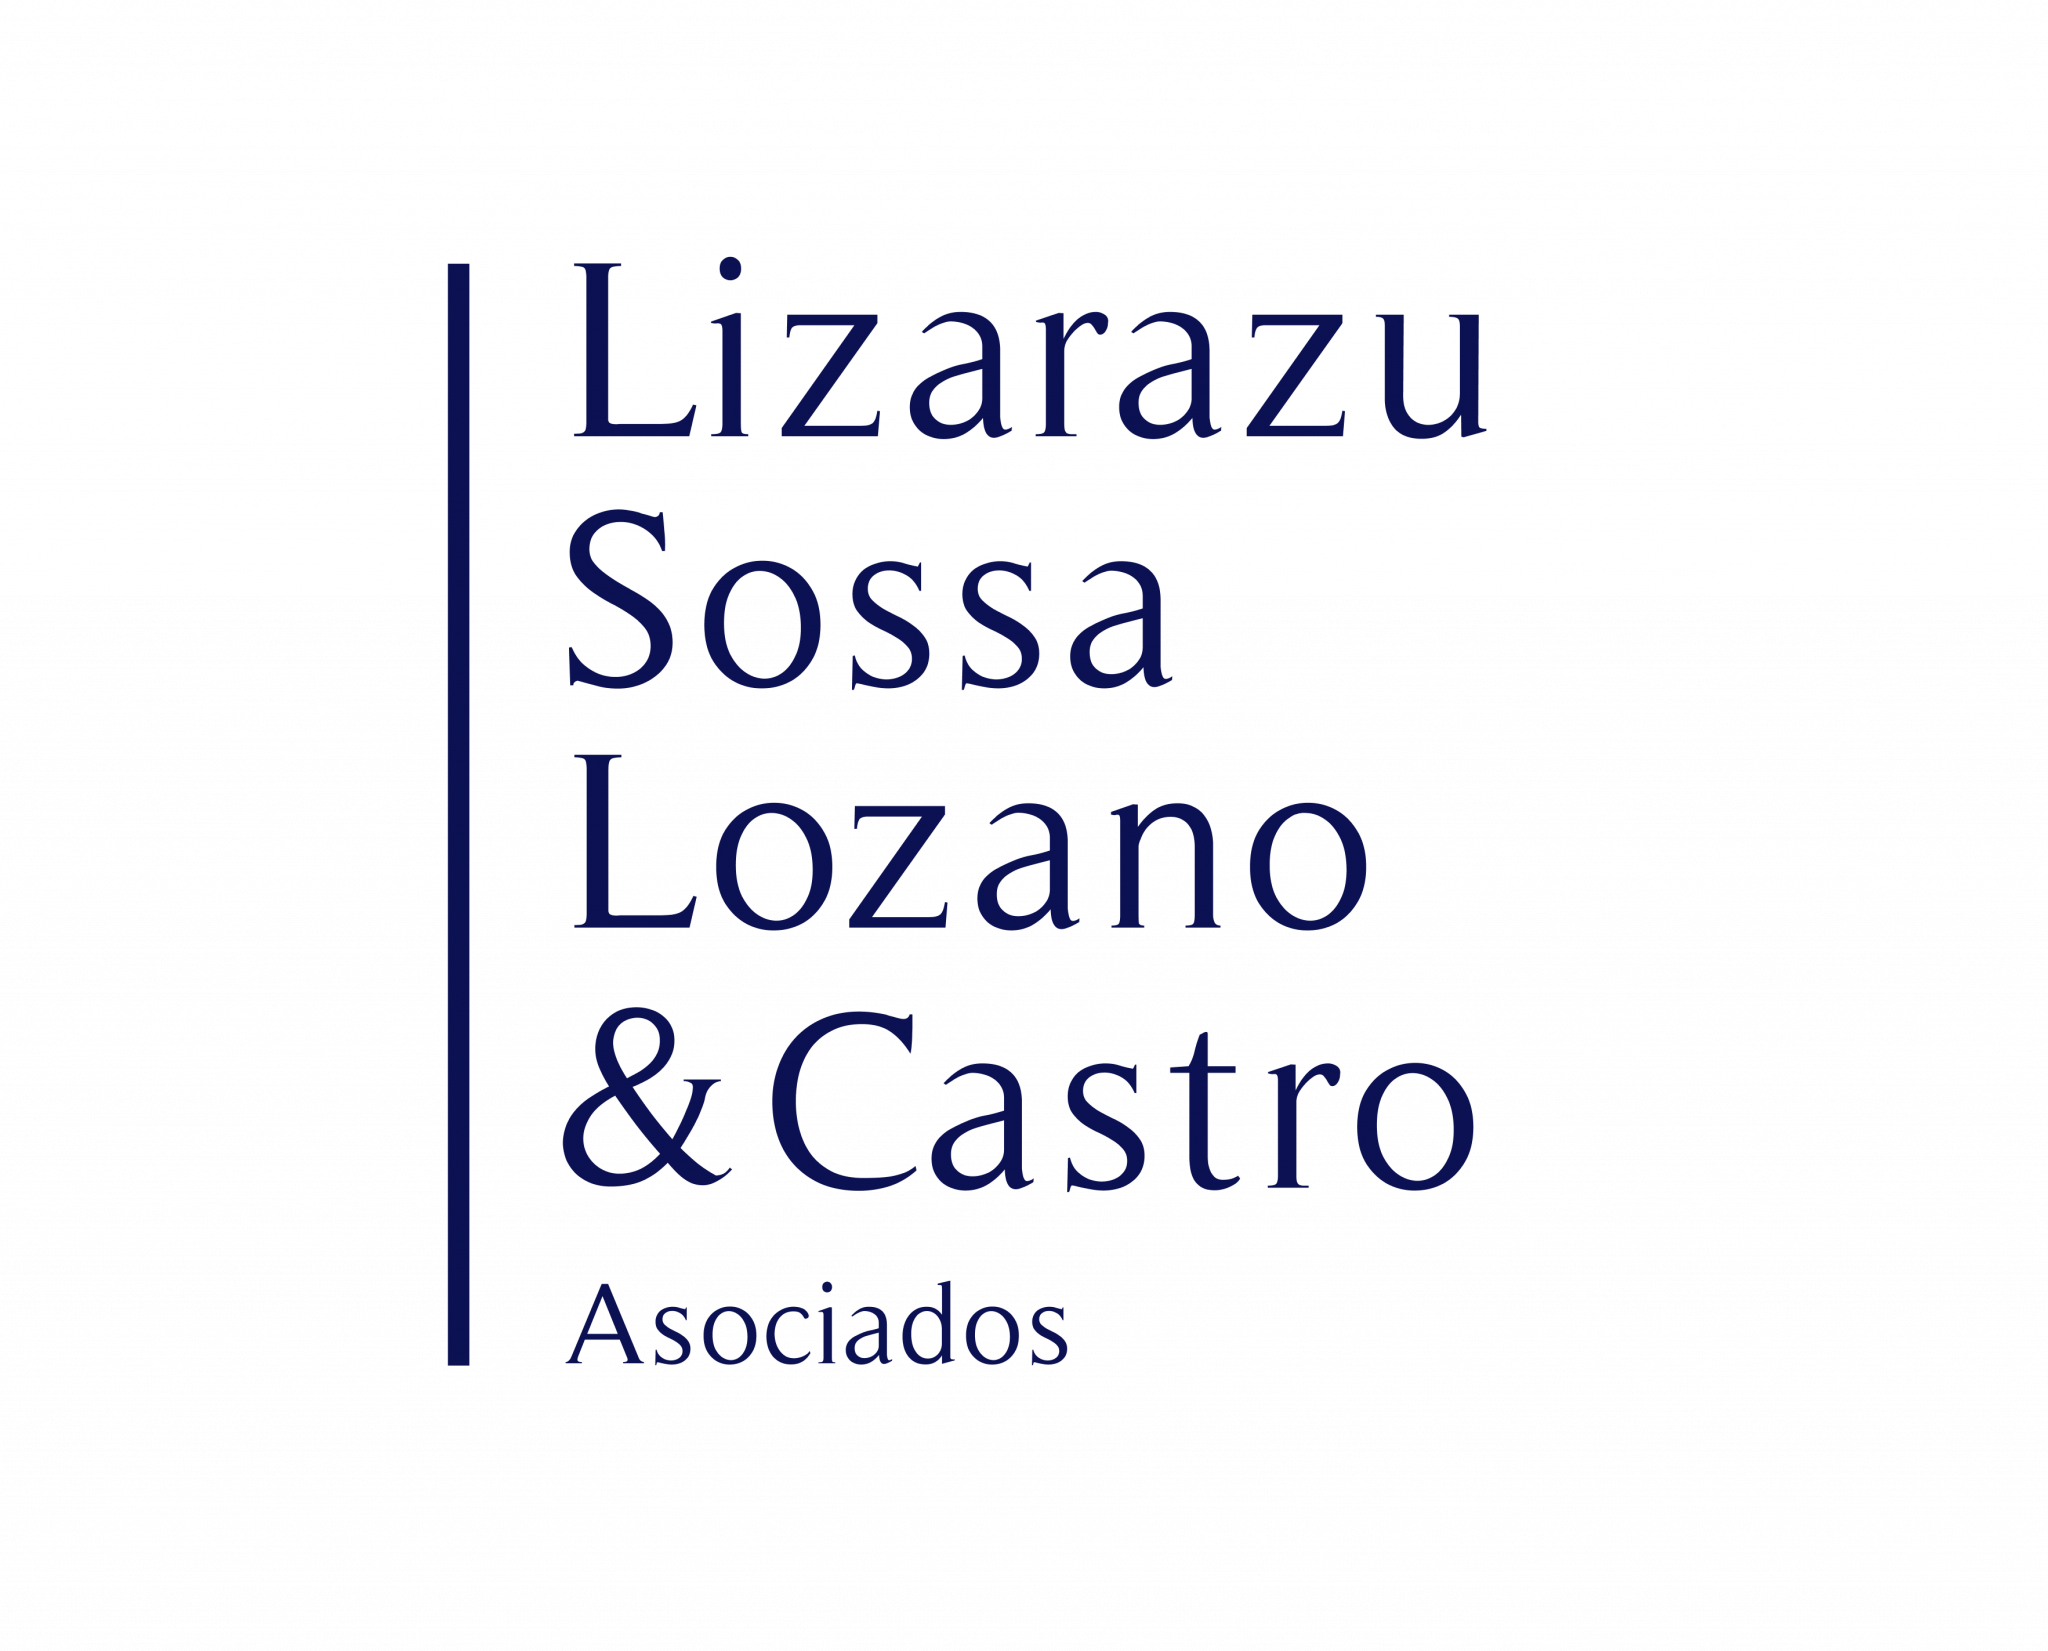 ciro-barbosa-trujillo-lizarazu-sossa-lozano-castro-abogados-asociados